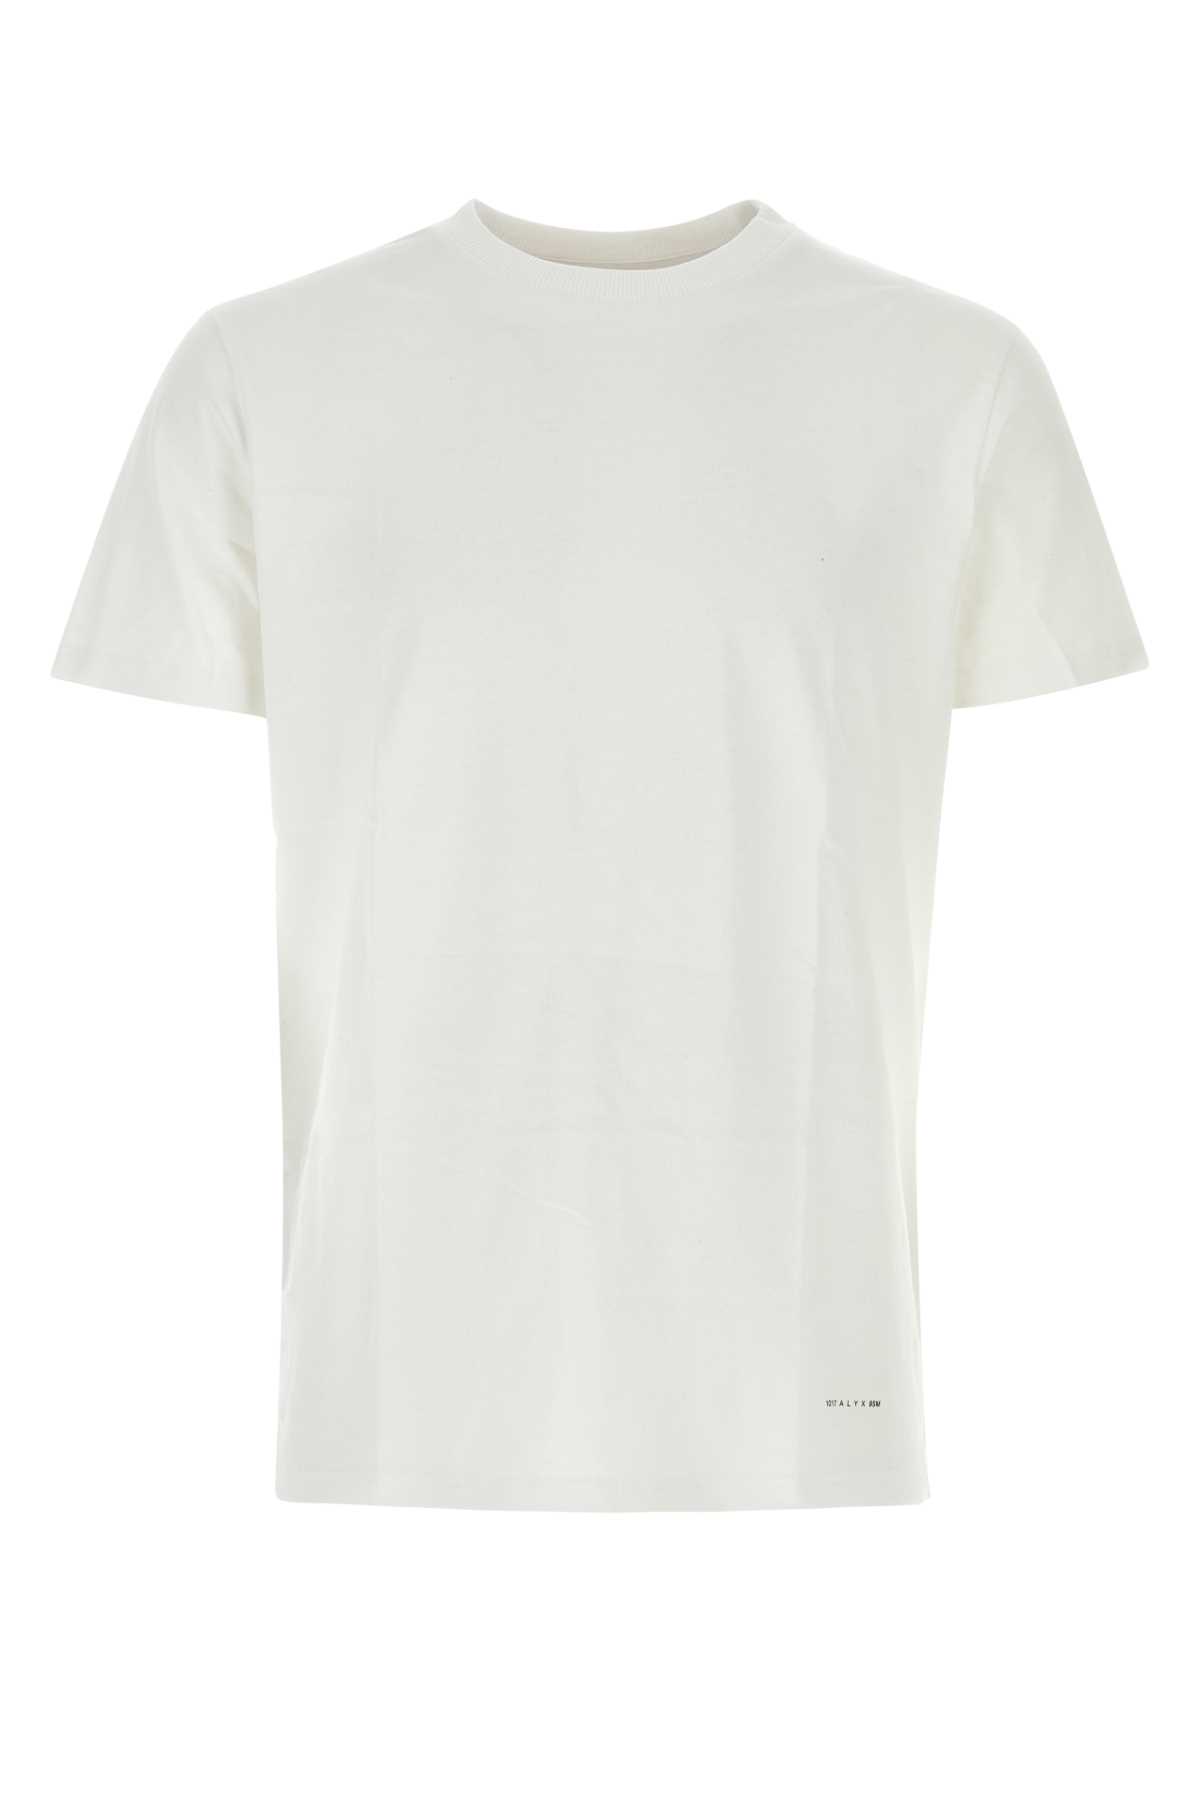 White Cotton T-shirt Set